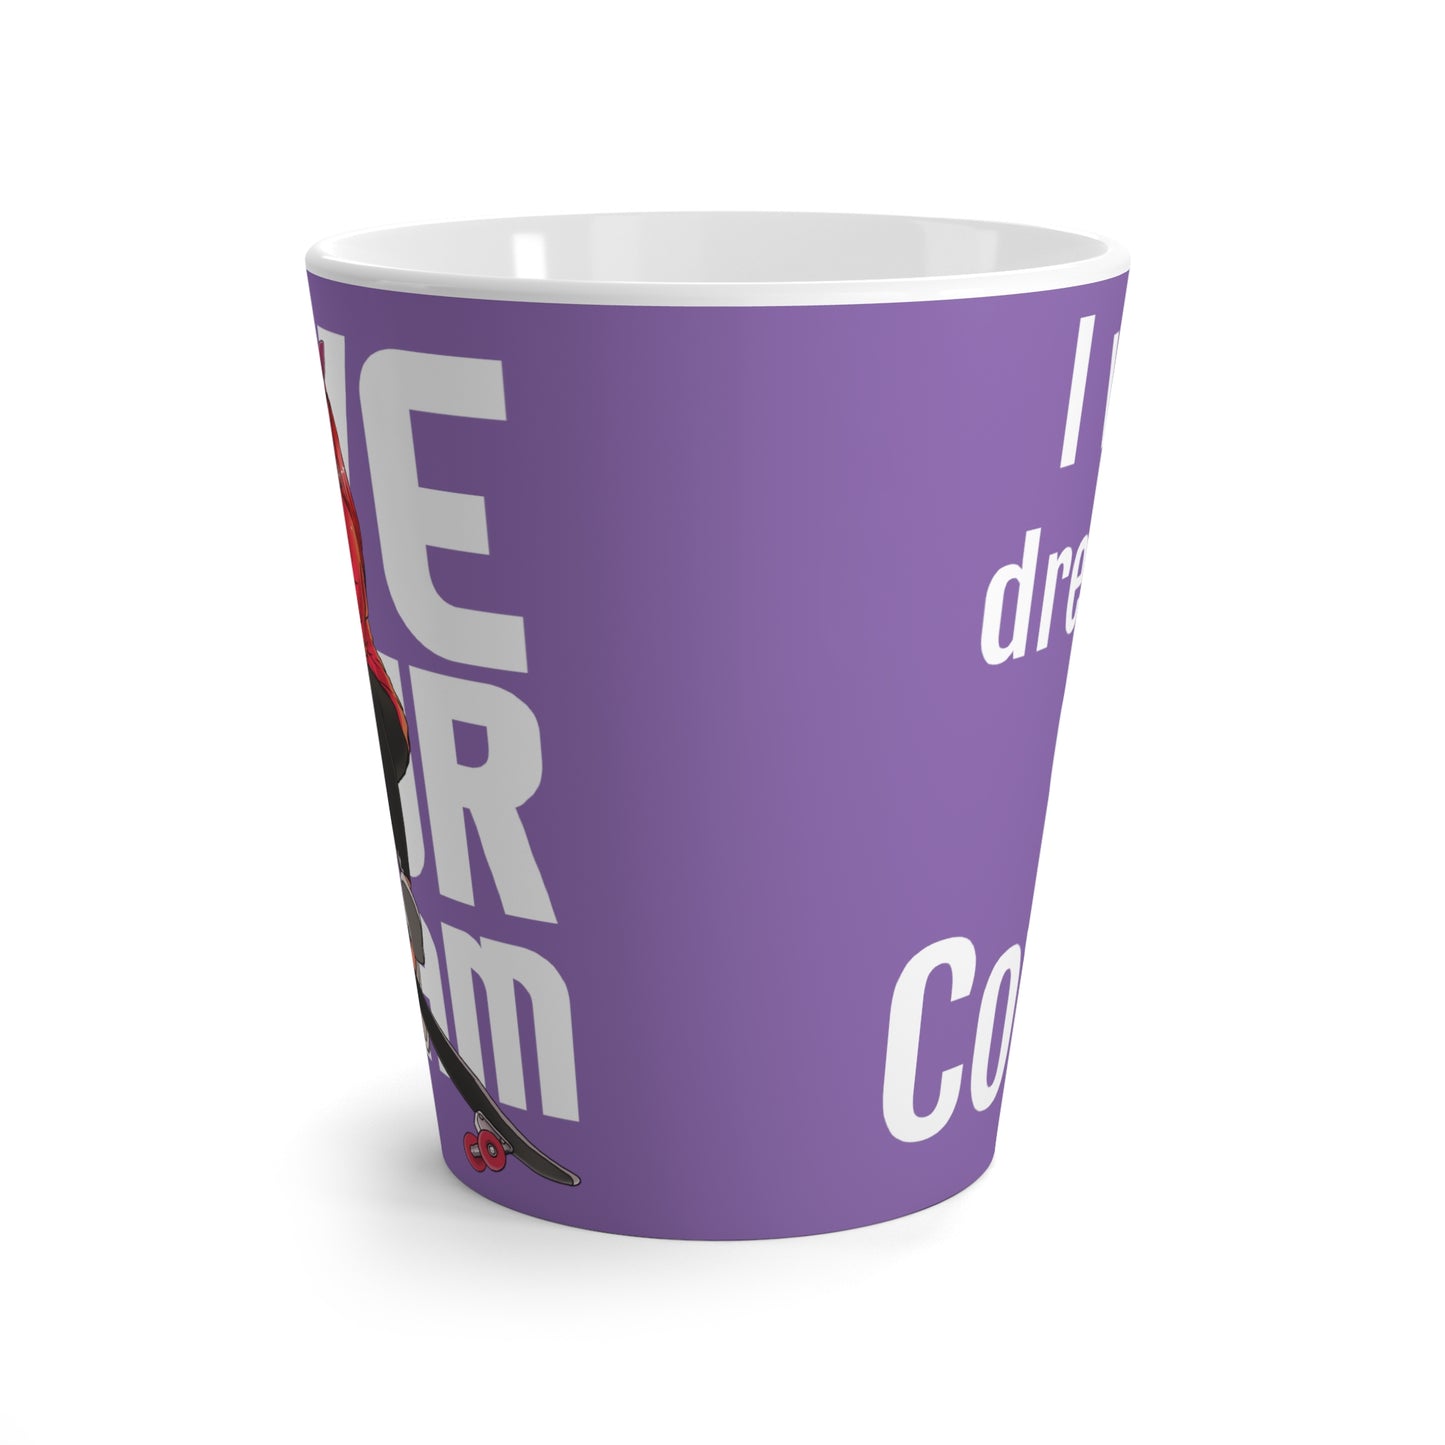 Live Your Dream of Coffee Mug- violet Unicorn head